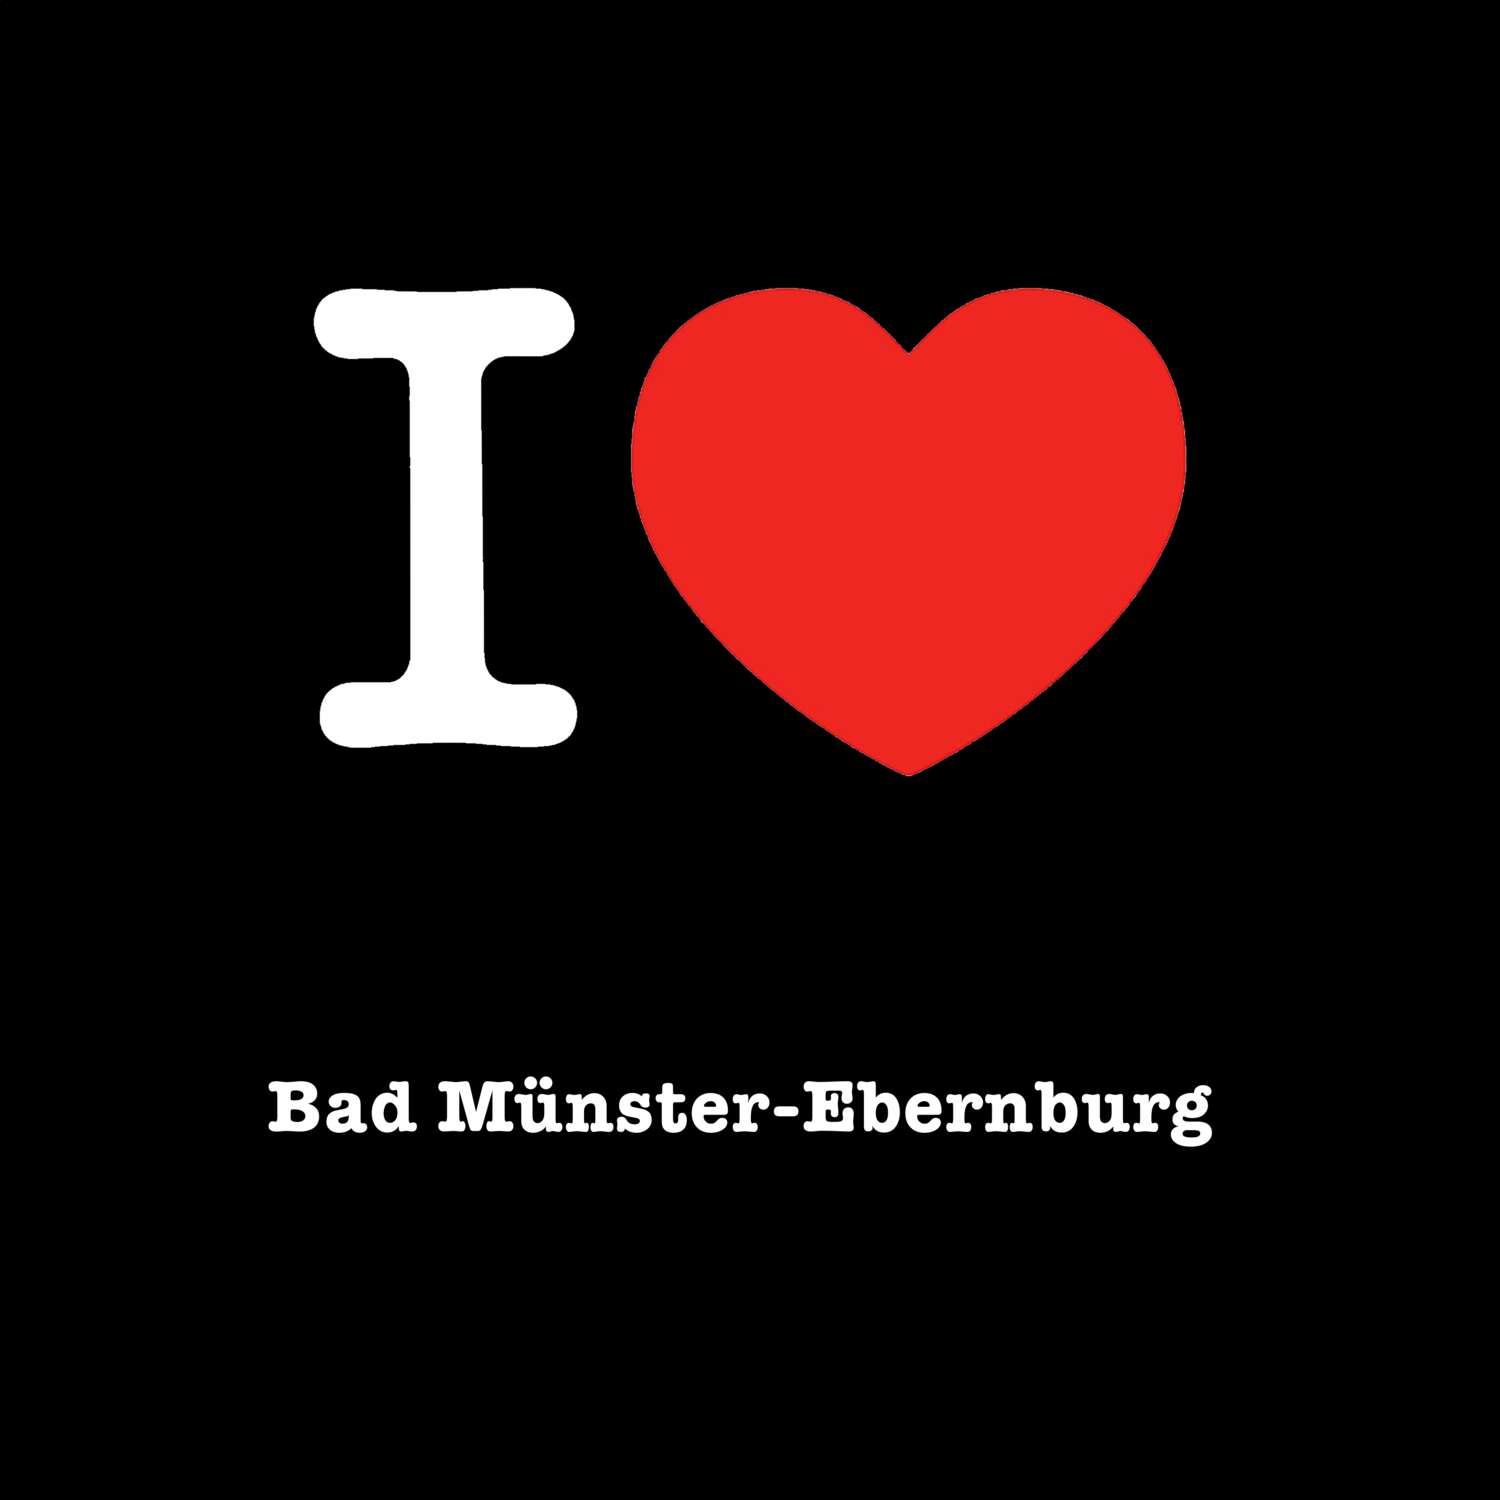 Bad Münster-Ebernburg T-Shirt »I love«